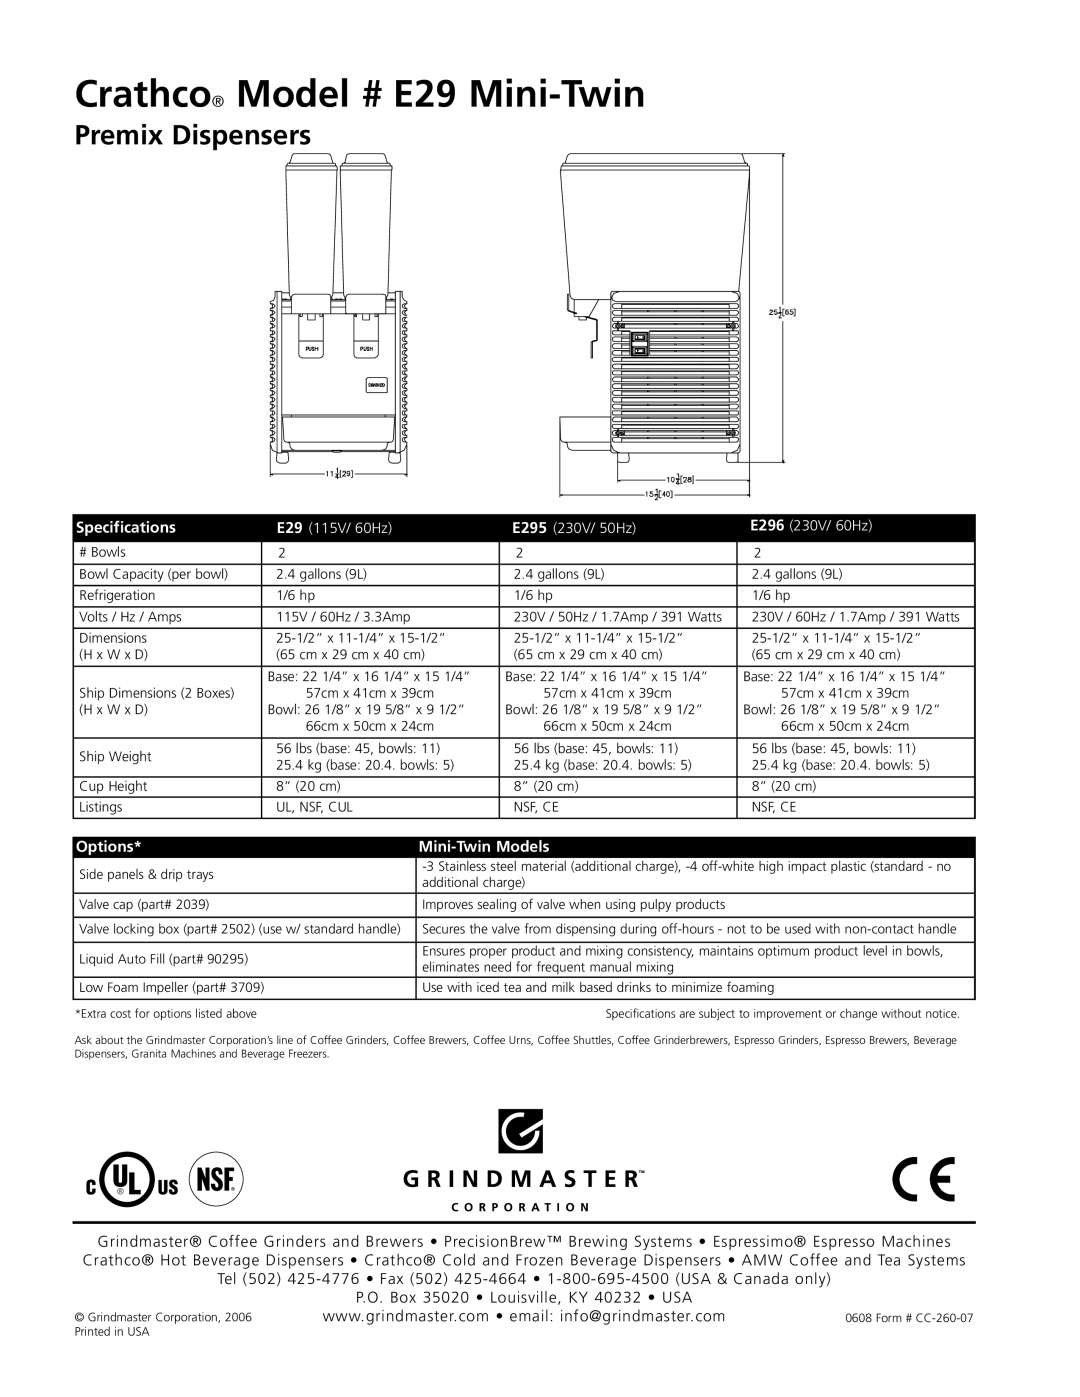 Grindmaster Crathco Model # E29 Mini-Twin, Premix Dispensers, Specifications, Options, Mini-TwinModels, E29 115V/ 60Hz 